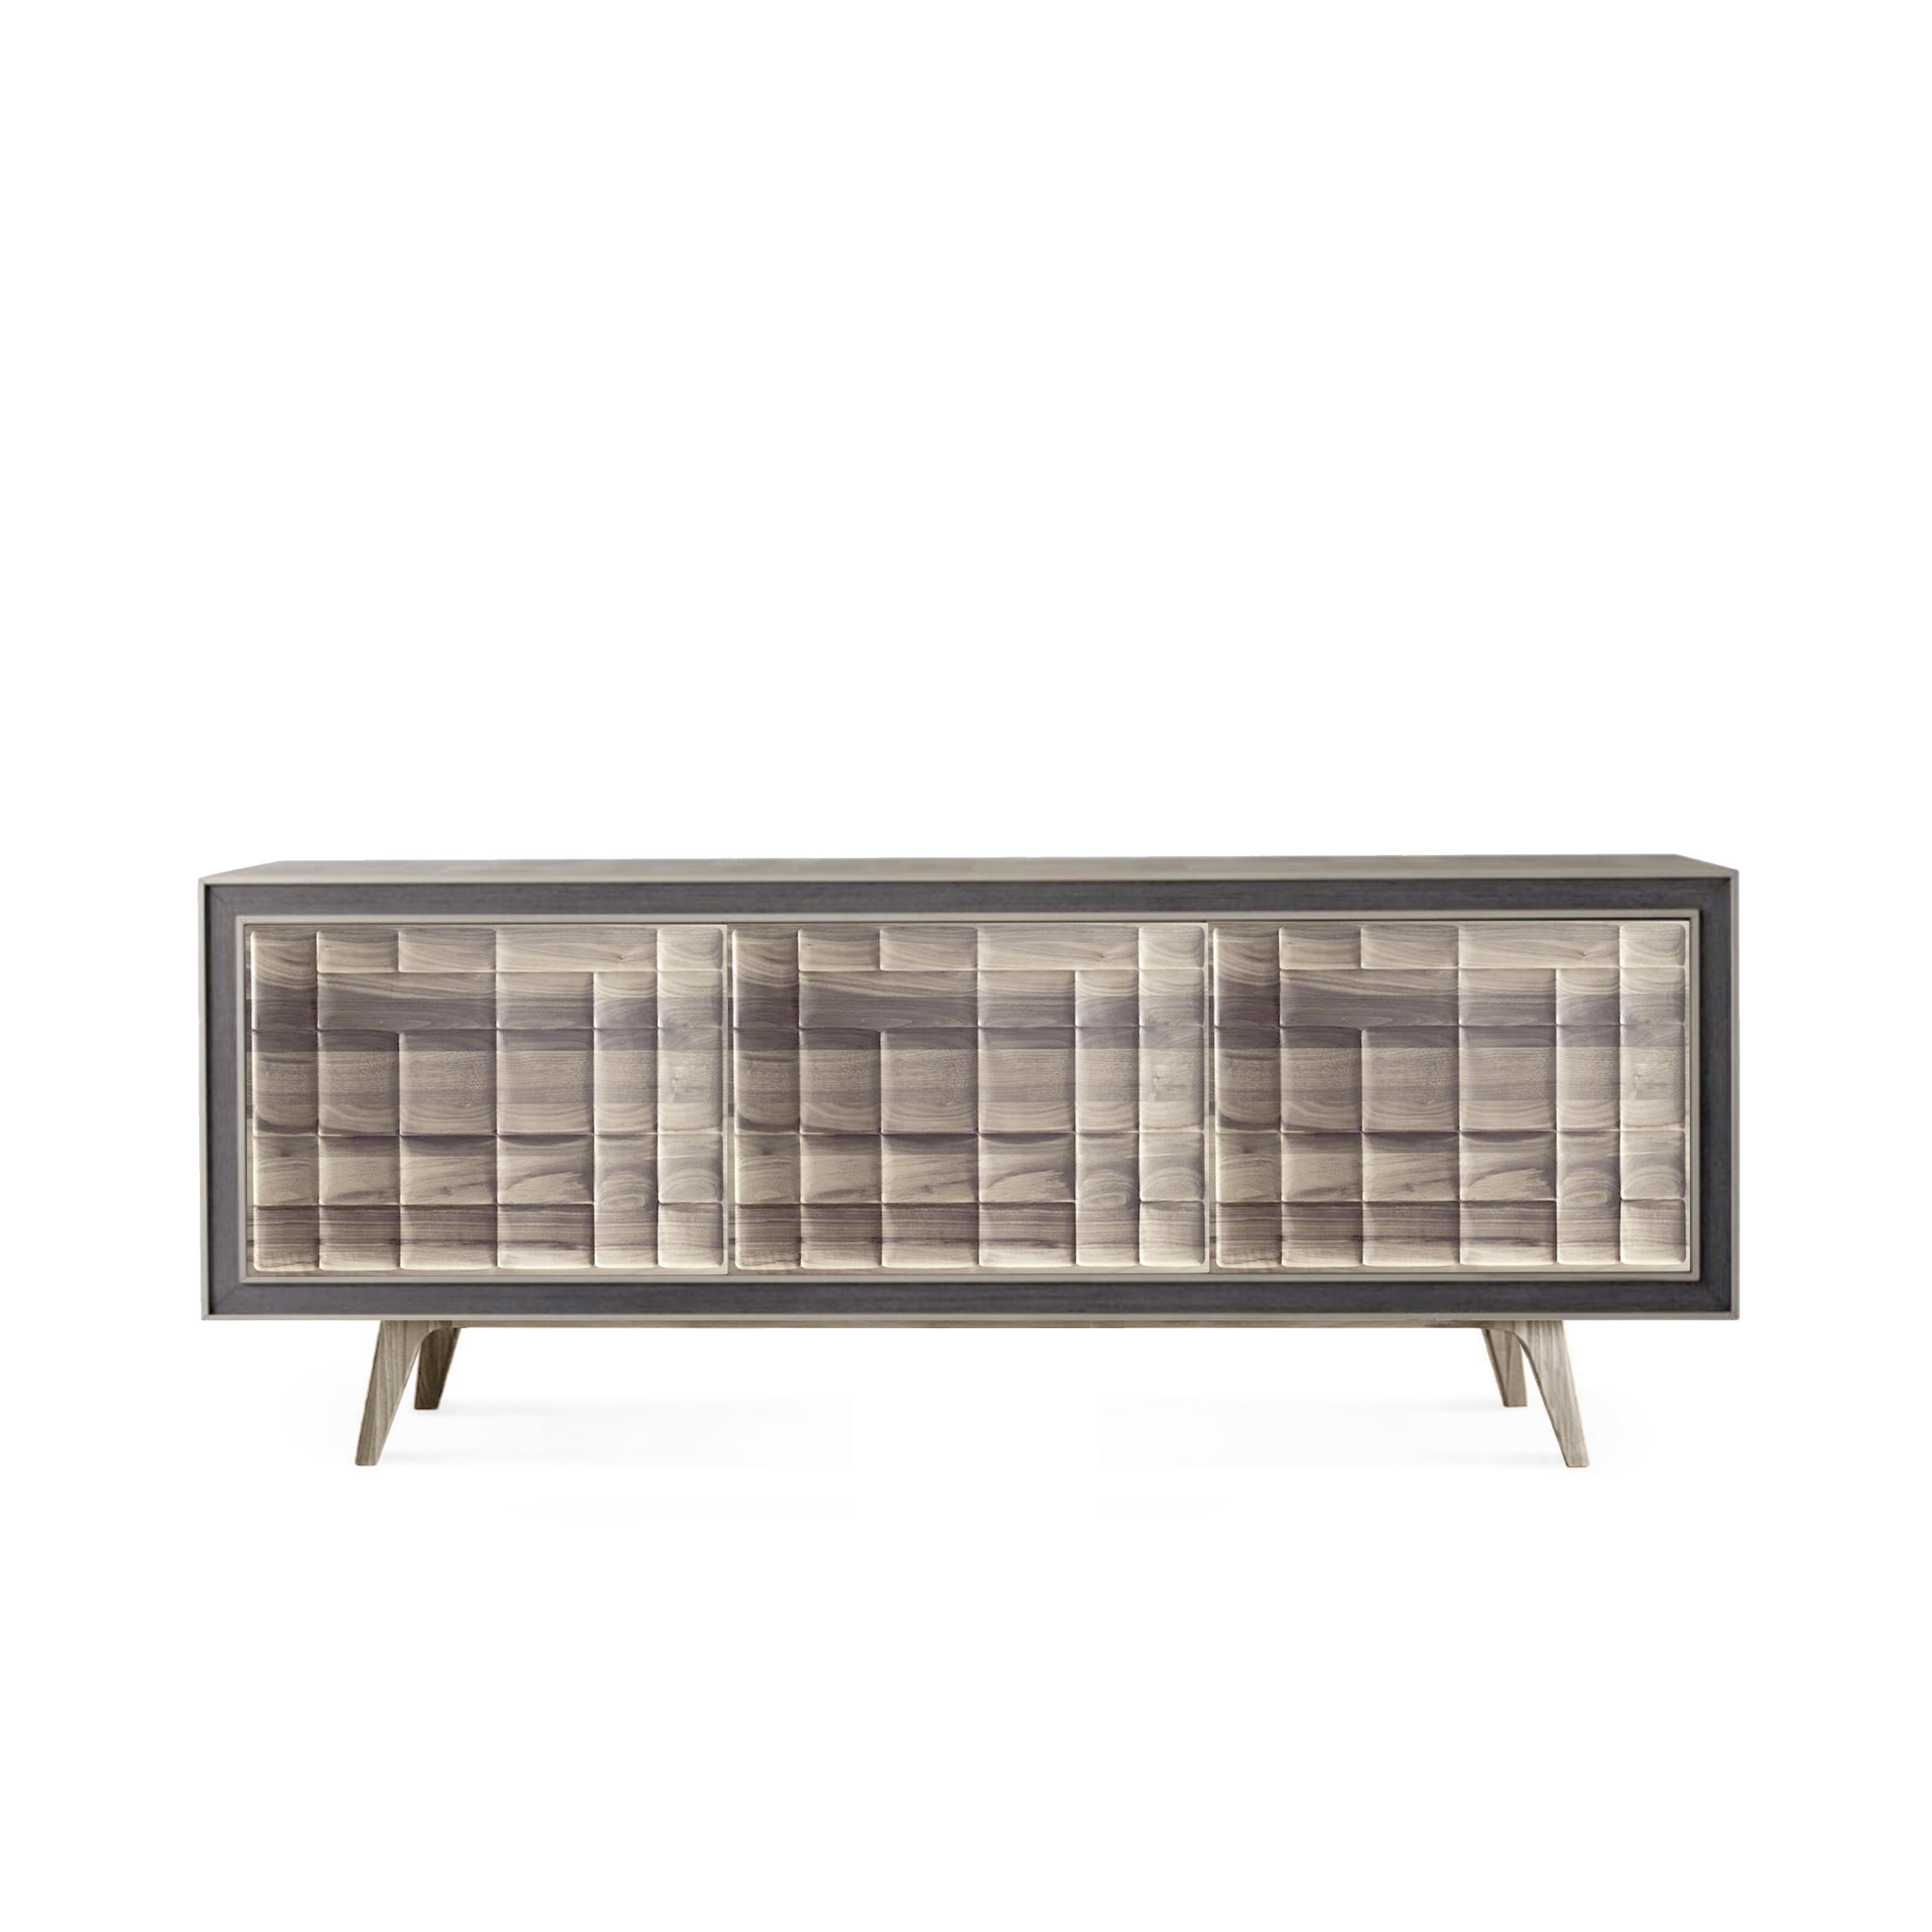 Quadra Scacco Solid Wood Sideboard, Walnut in Natural Grey Finish, Contemporary In New Condition For Sale In Cadeglioppi de Oppeano, VR